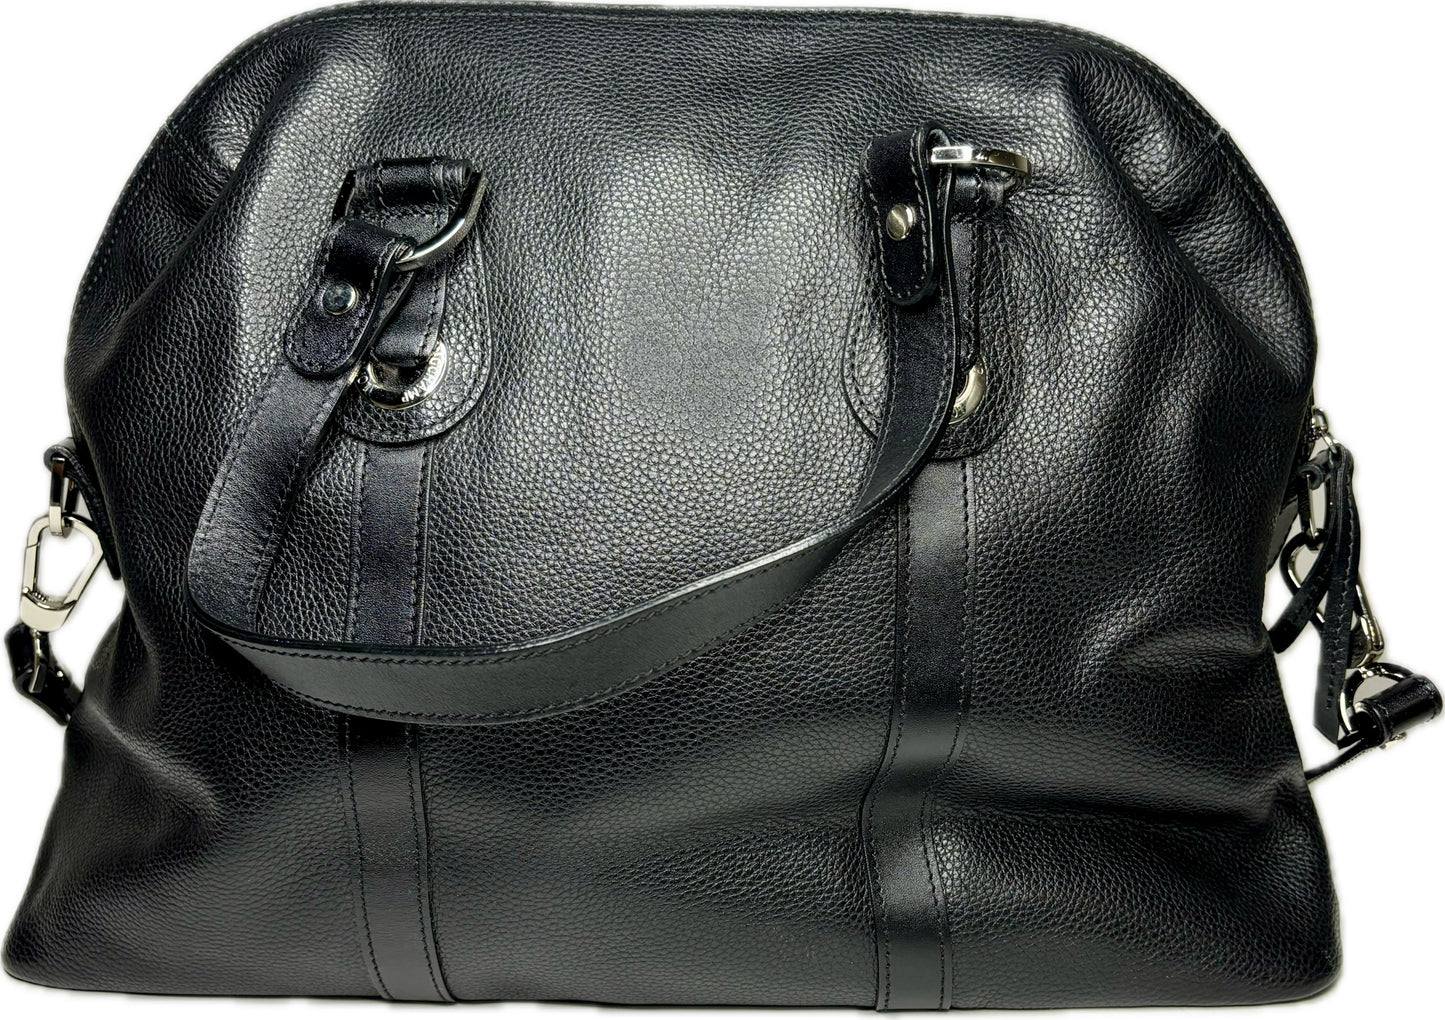 Leather Longchamp Purse